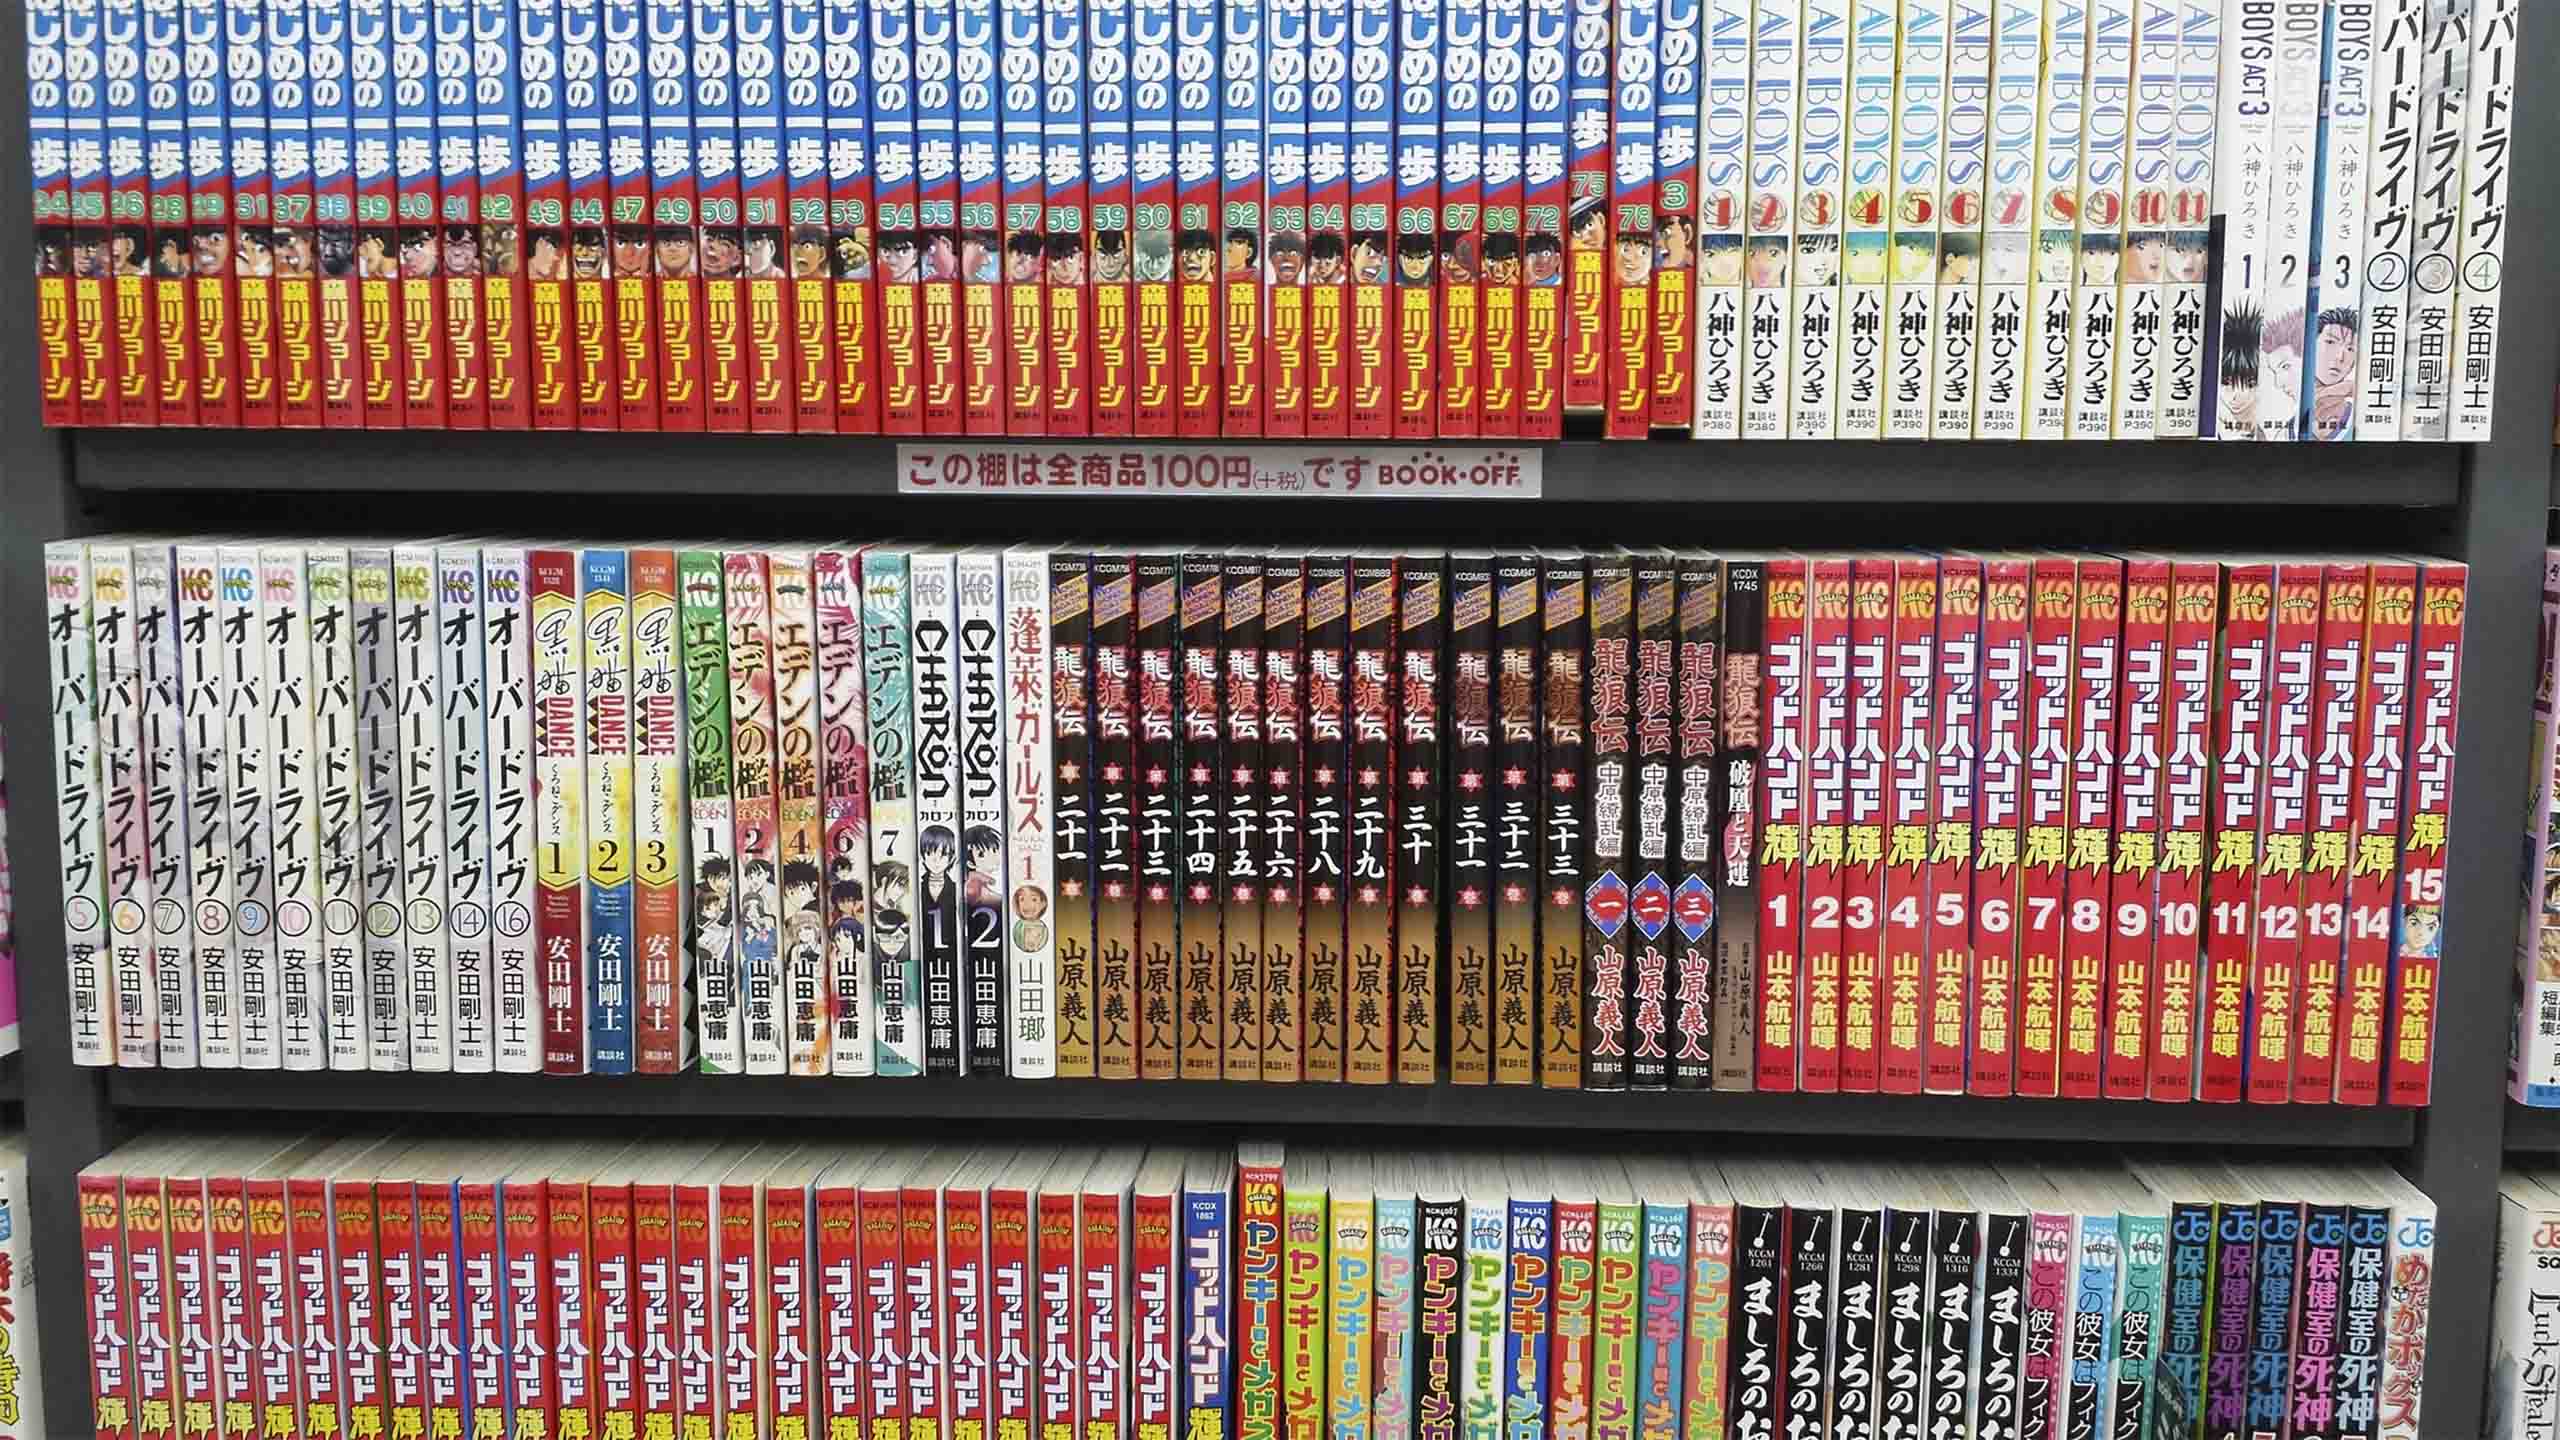 Leer manga y manhwa online de forma legal